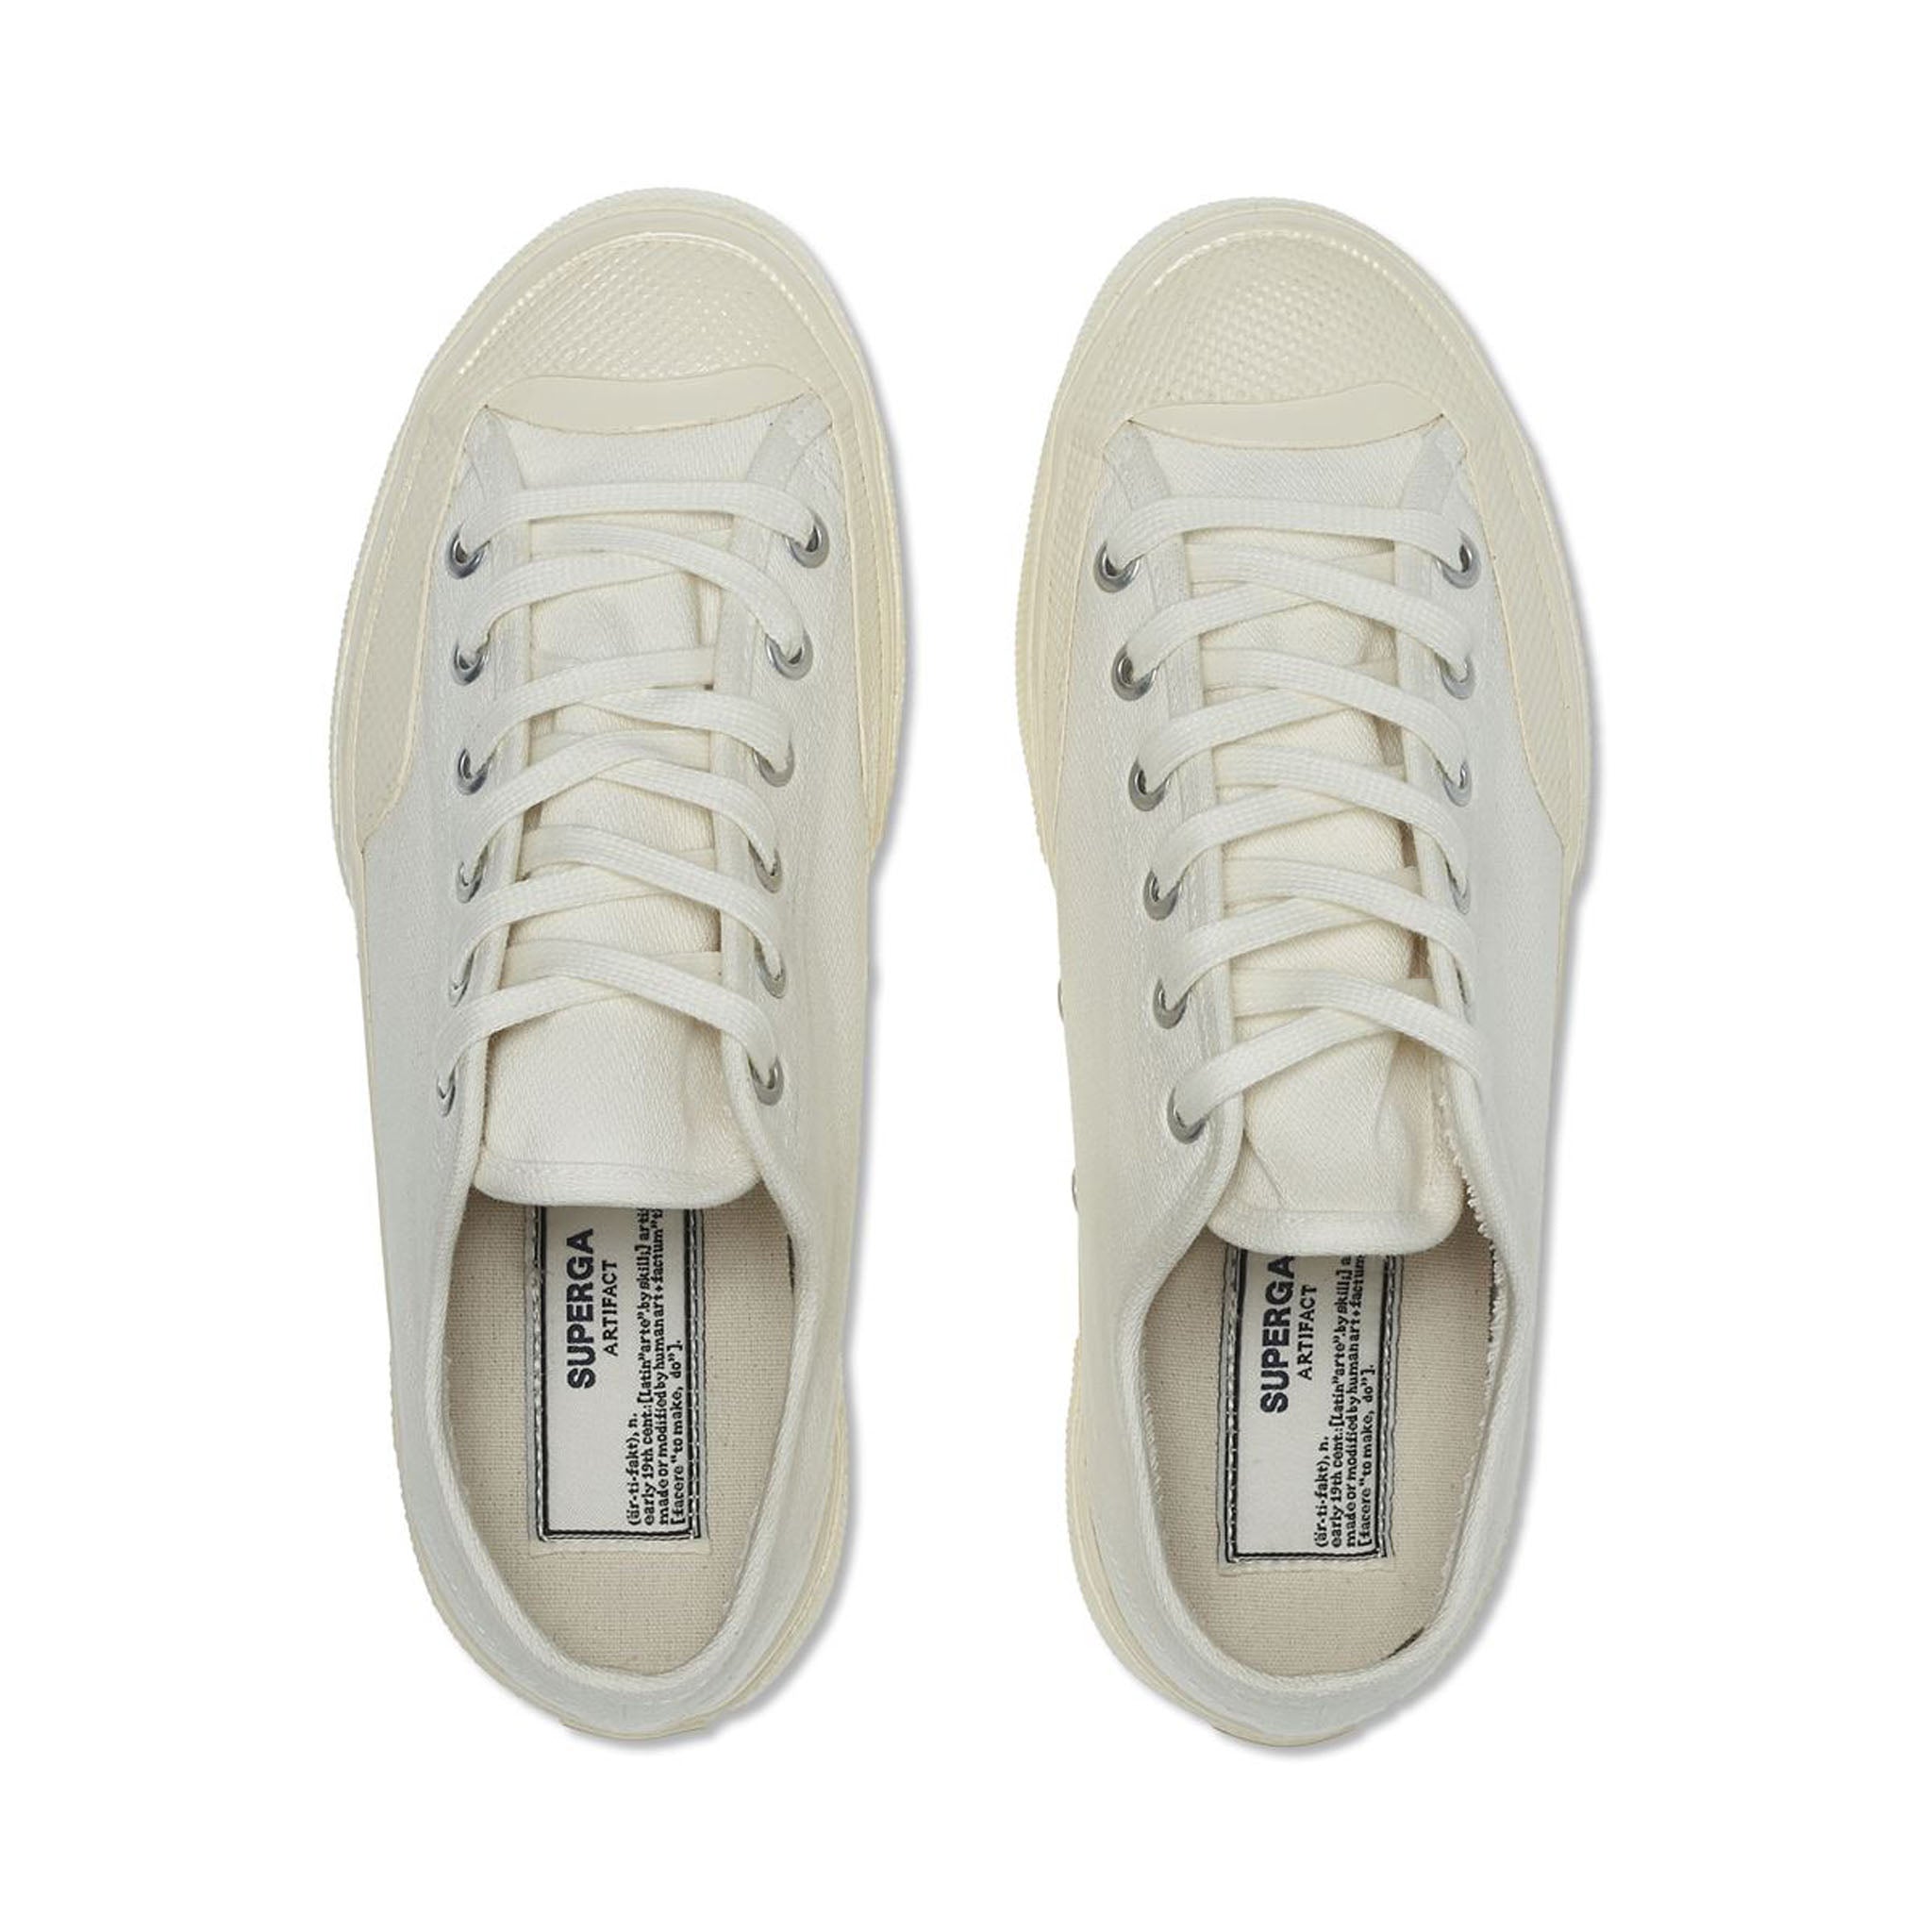 Superga 2432 Workwear Sneakers - White Off White. Top view.